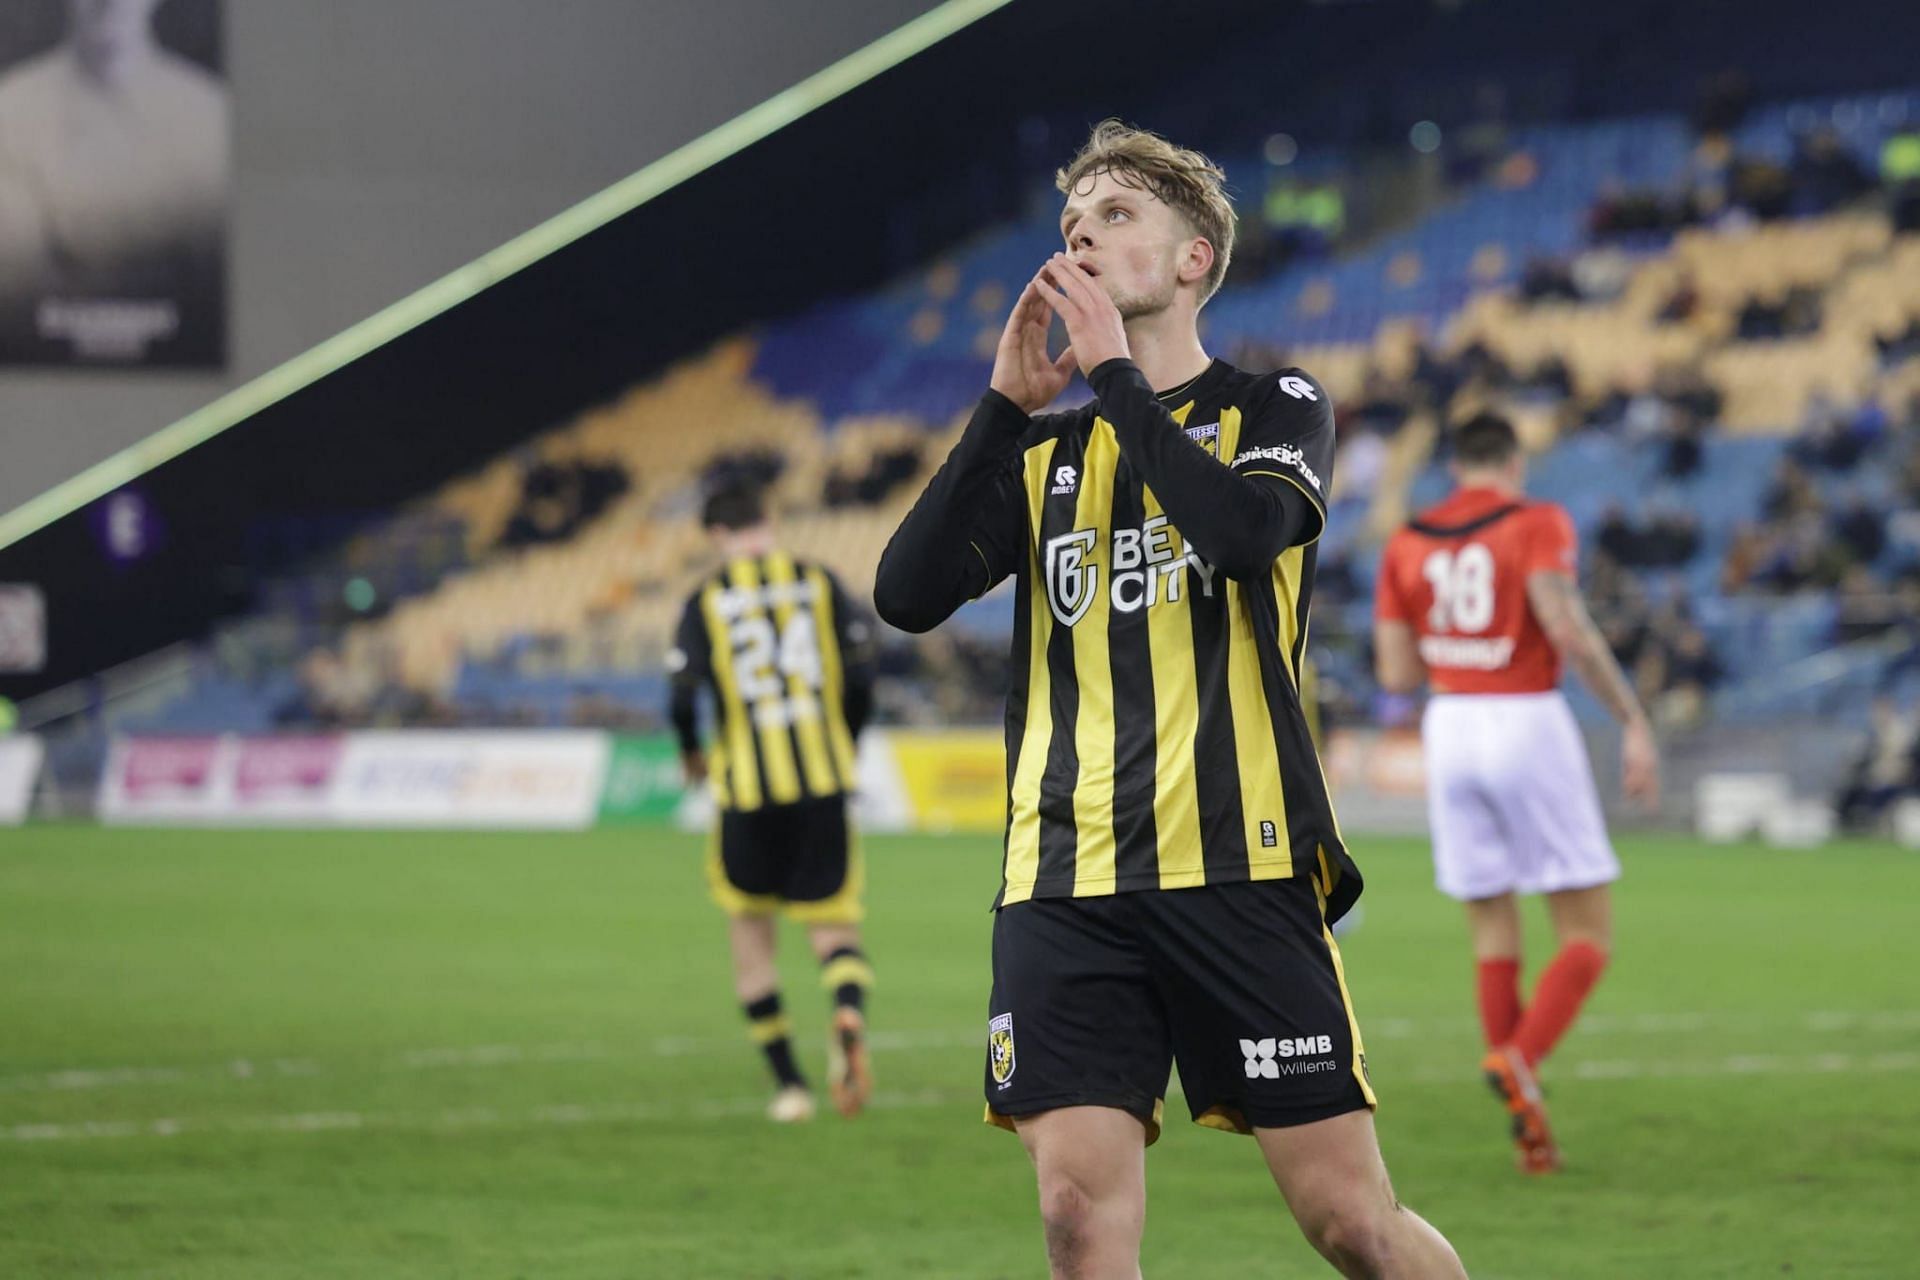 Vitesse will face Volendam on Sunday 